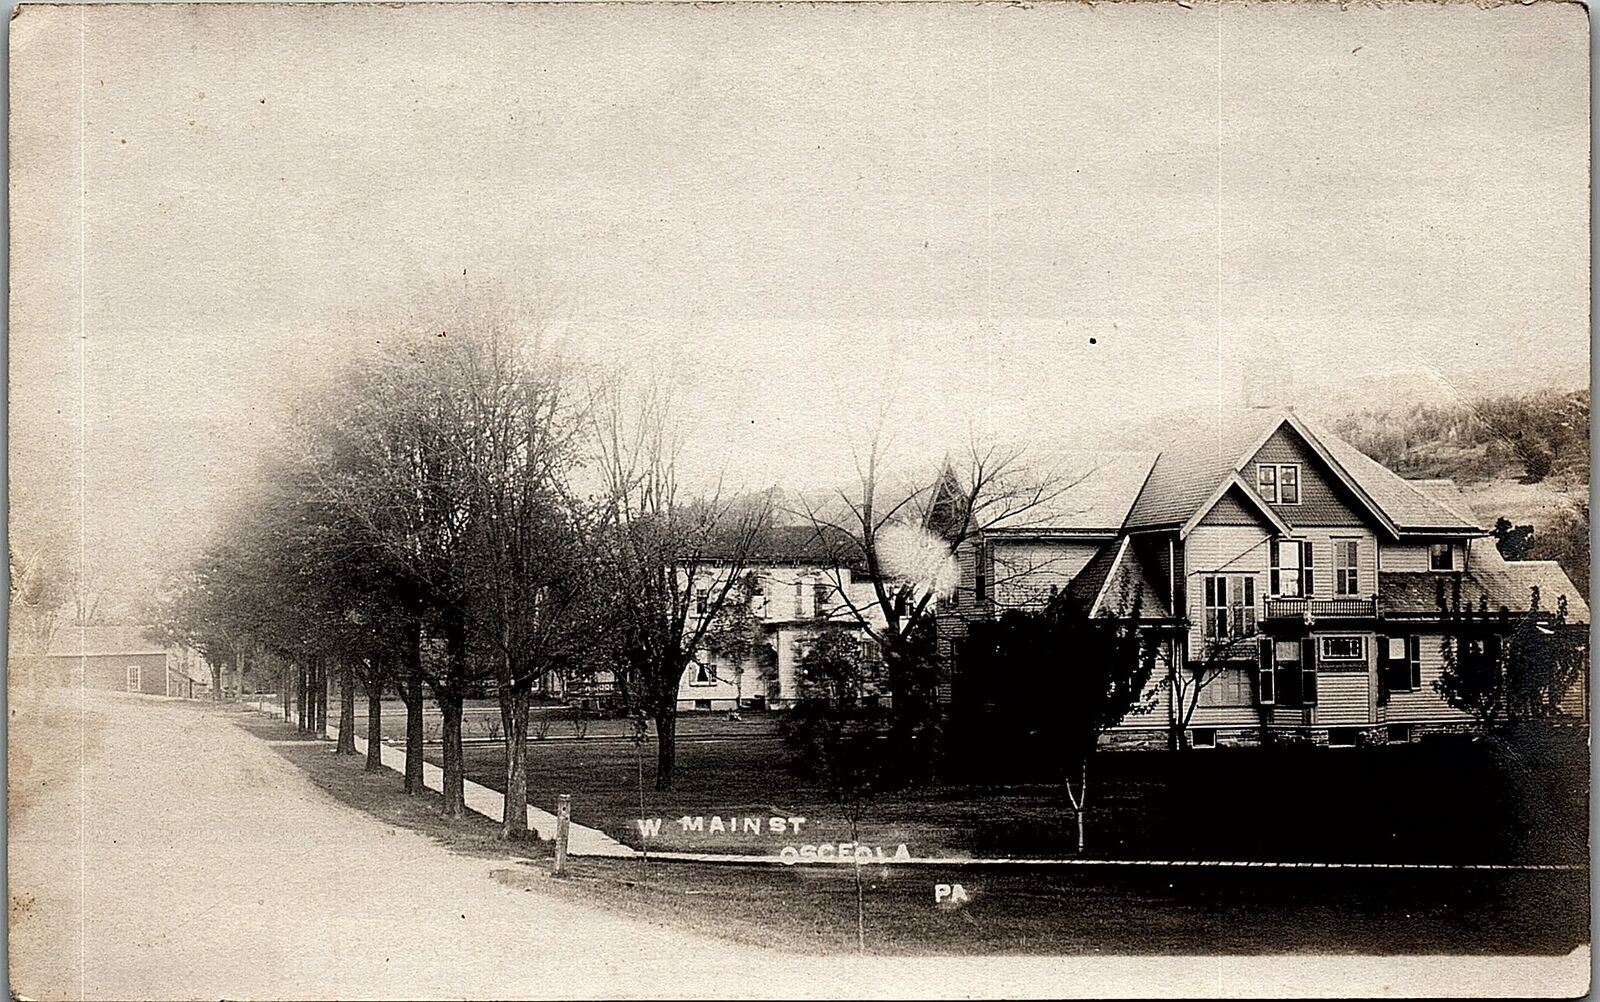 1908 OSCEOLA PENNSYLVANIA W. MAIN STREET REAL PHOTO RPPC POSTCARD 38-84